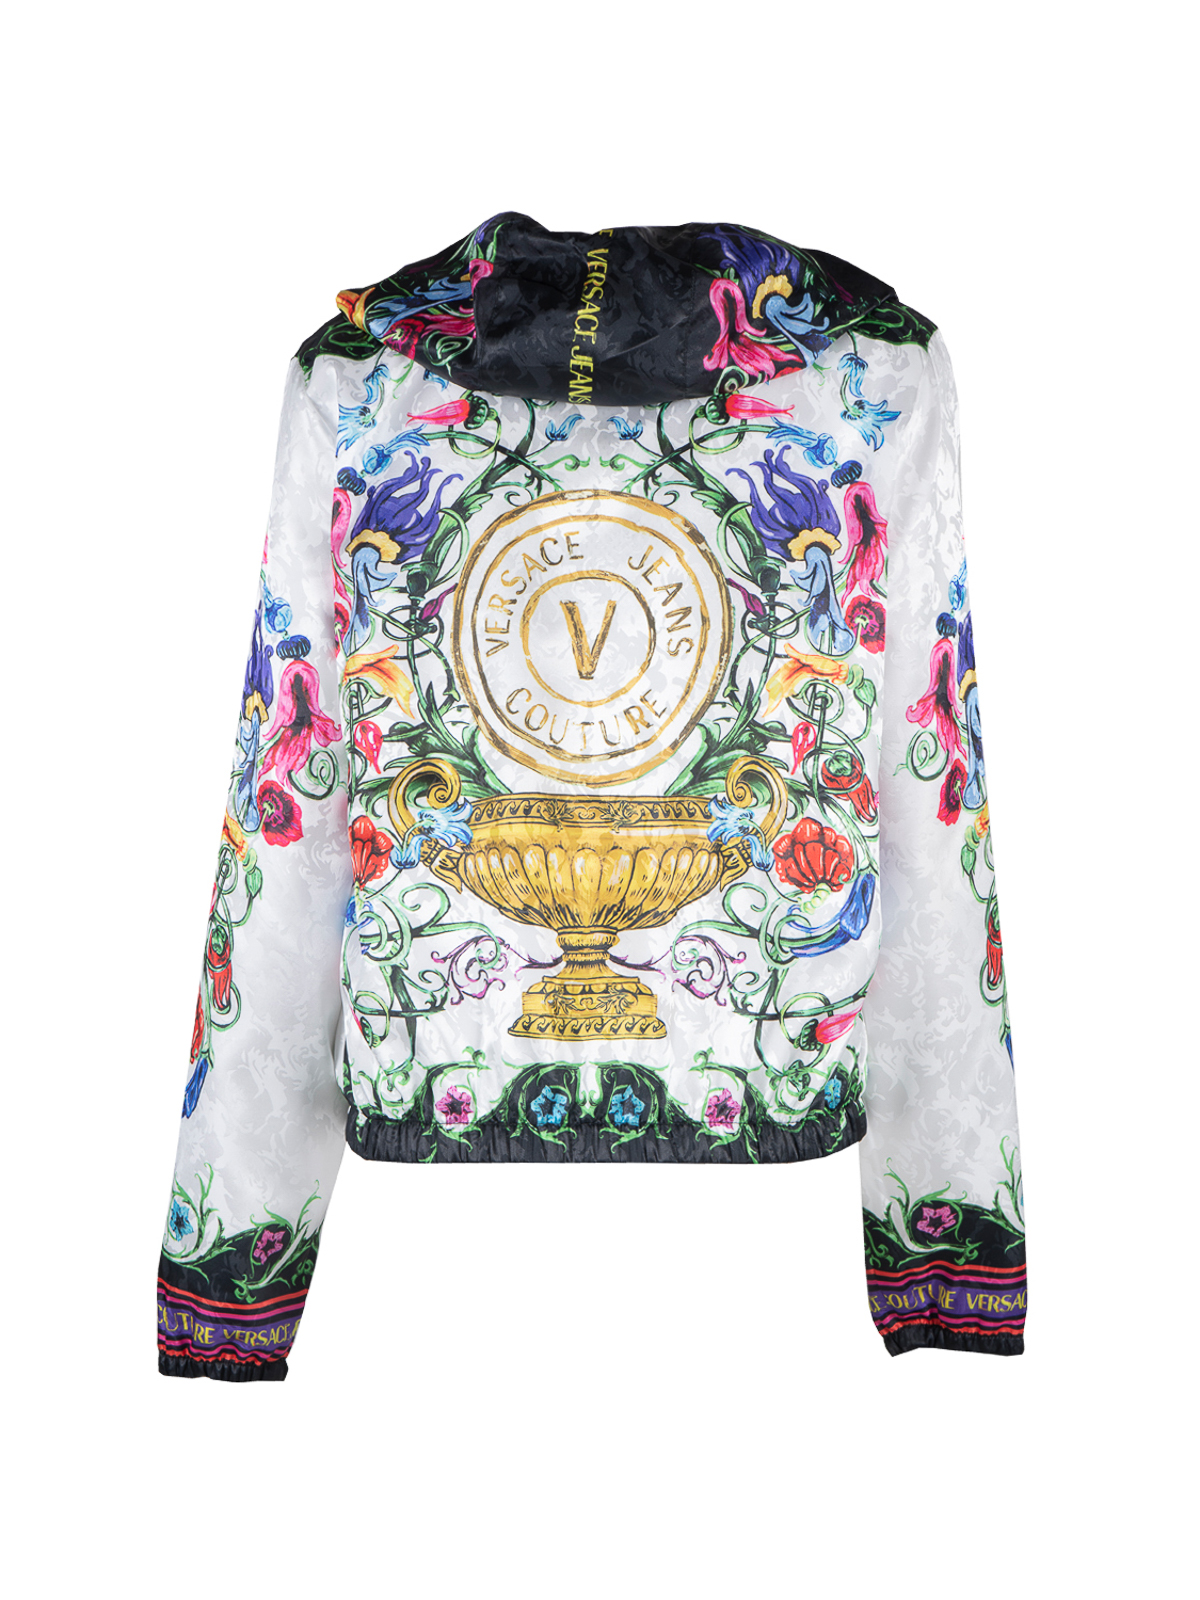 Versace V Emblem Long-Sleeved T-shirt